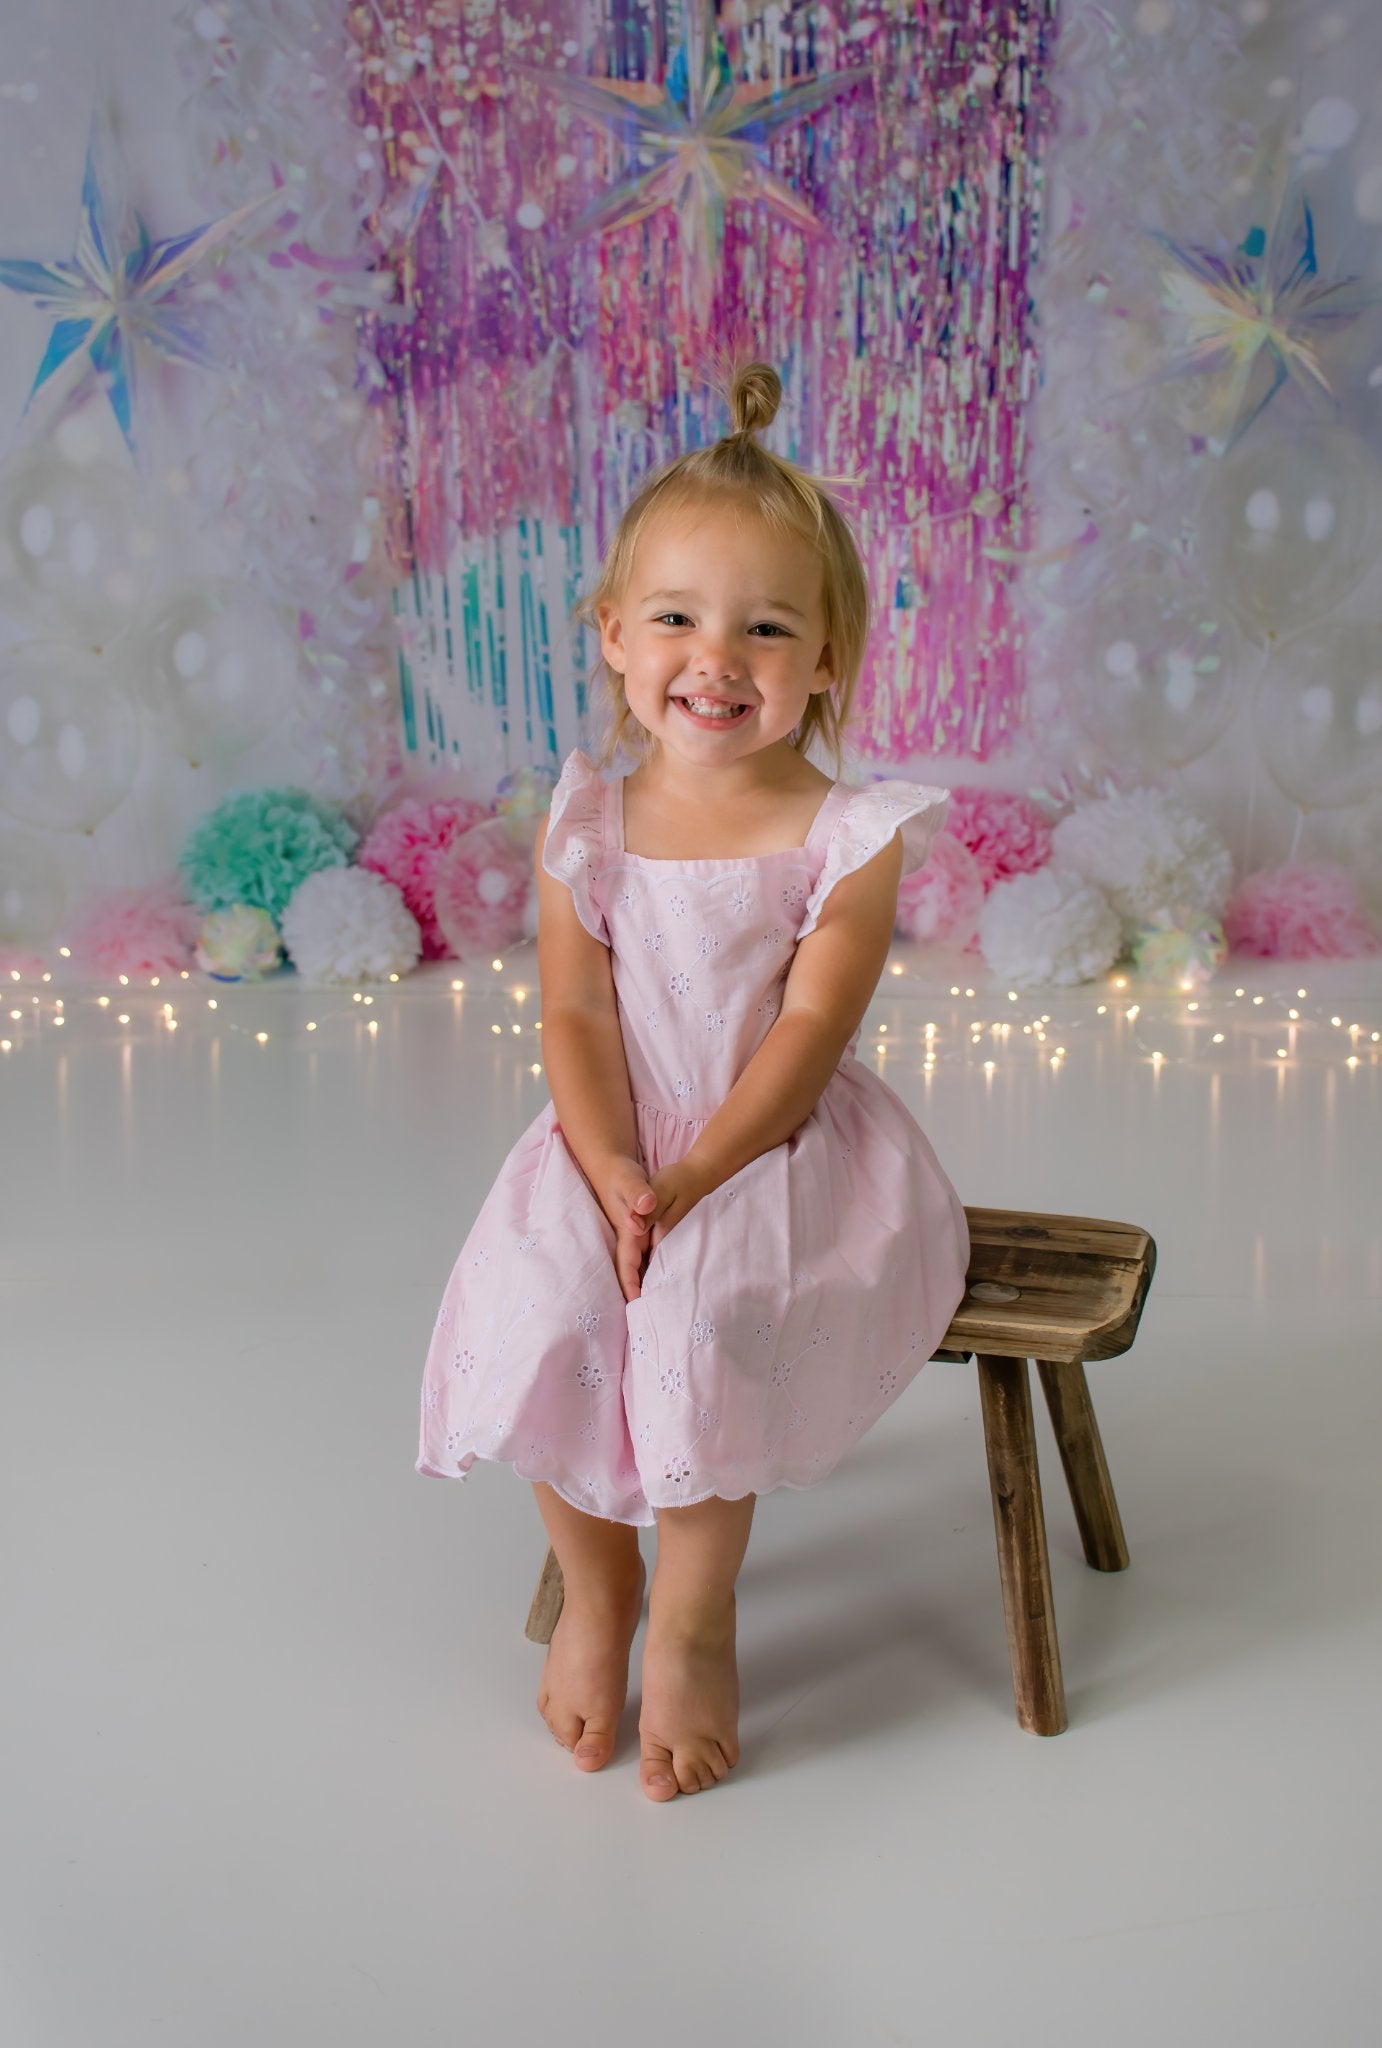 Kate Iridescent Rainbow Sparkle Backdrop Designed by Mandy Ringe Photography